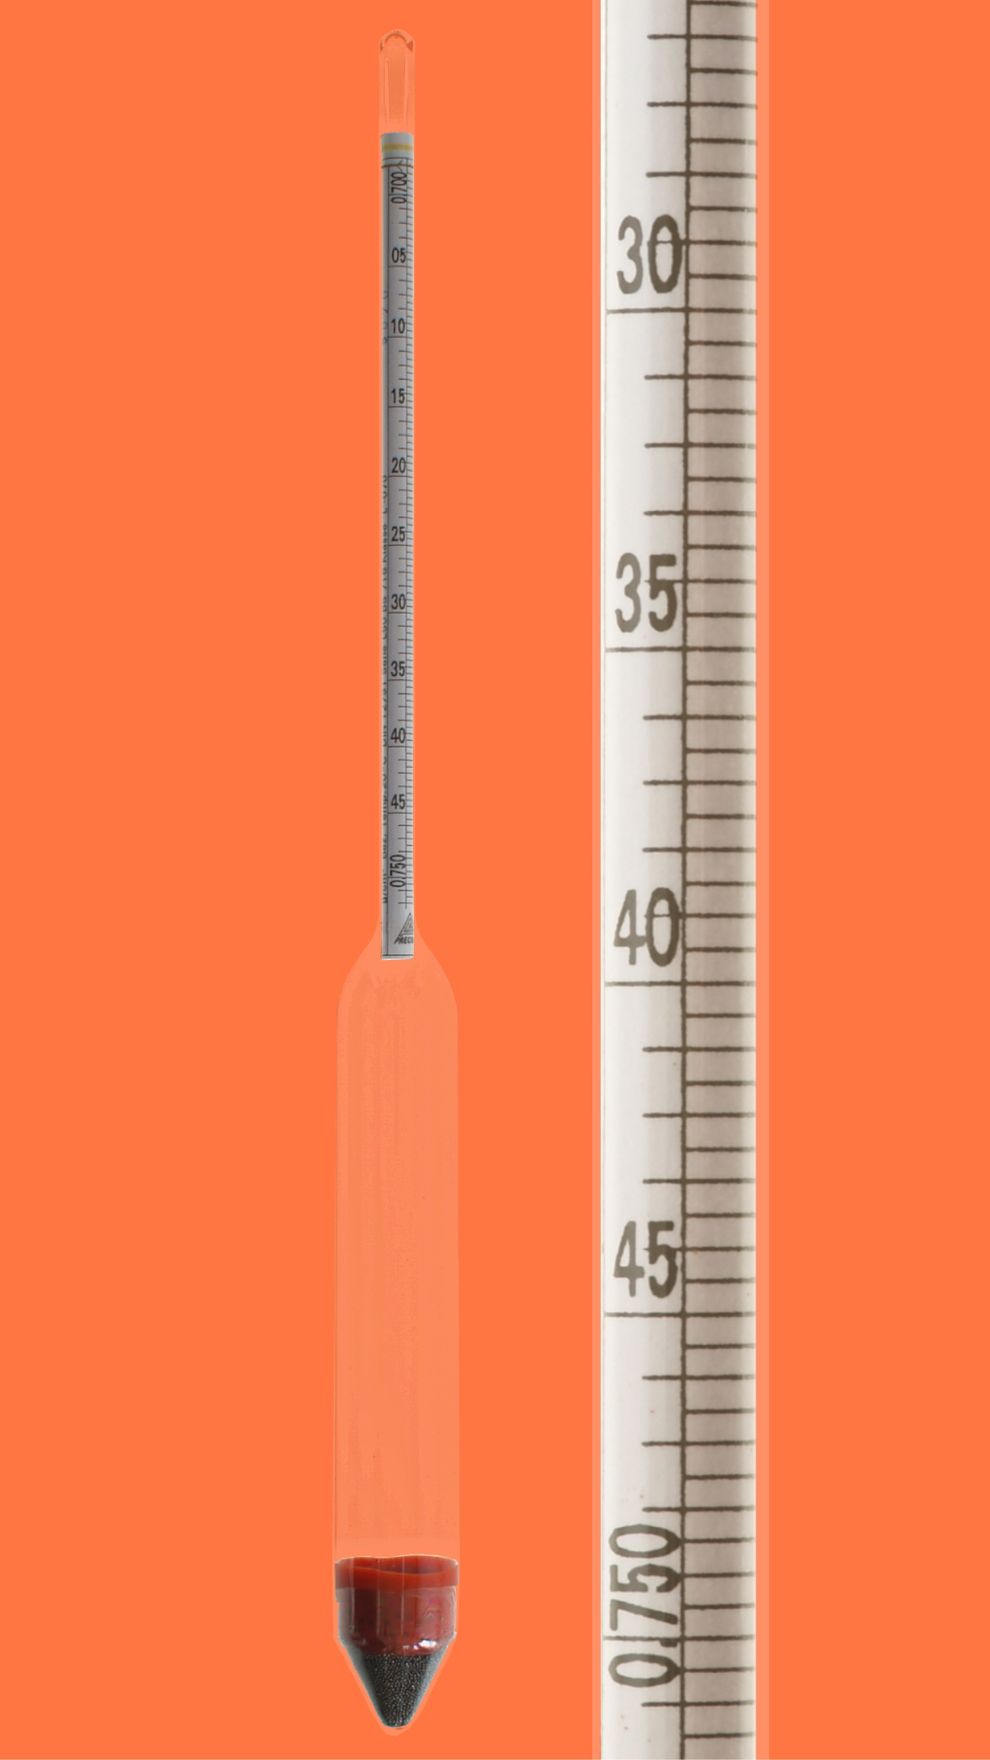 Aräometer, DIN 12791, L50, 1,30-1,35:0,0005g/cm³, Bezugstemp. 20°C, ohne Thermometer